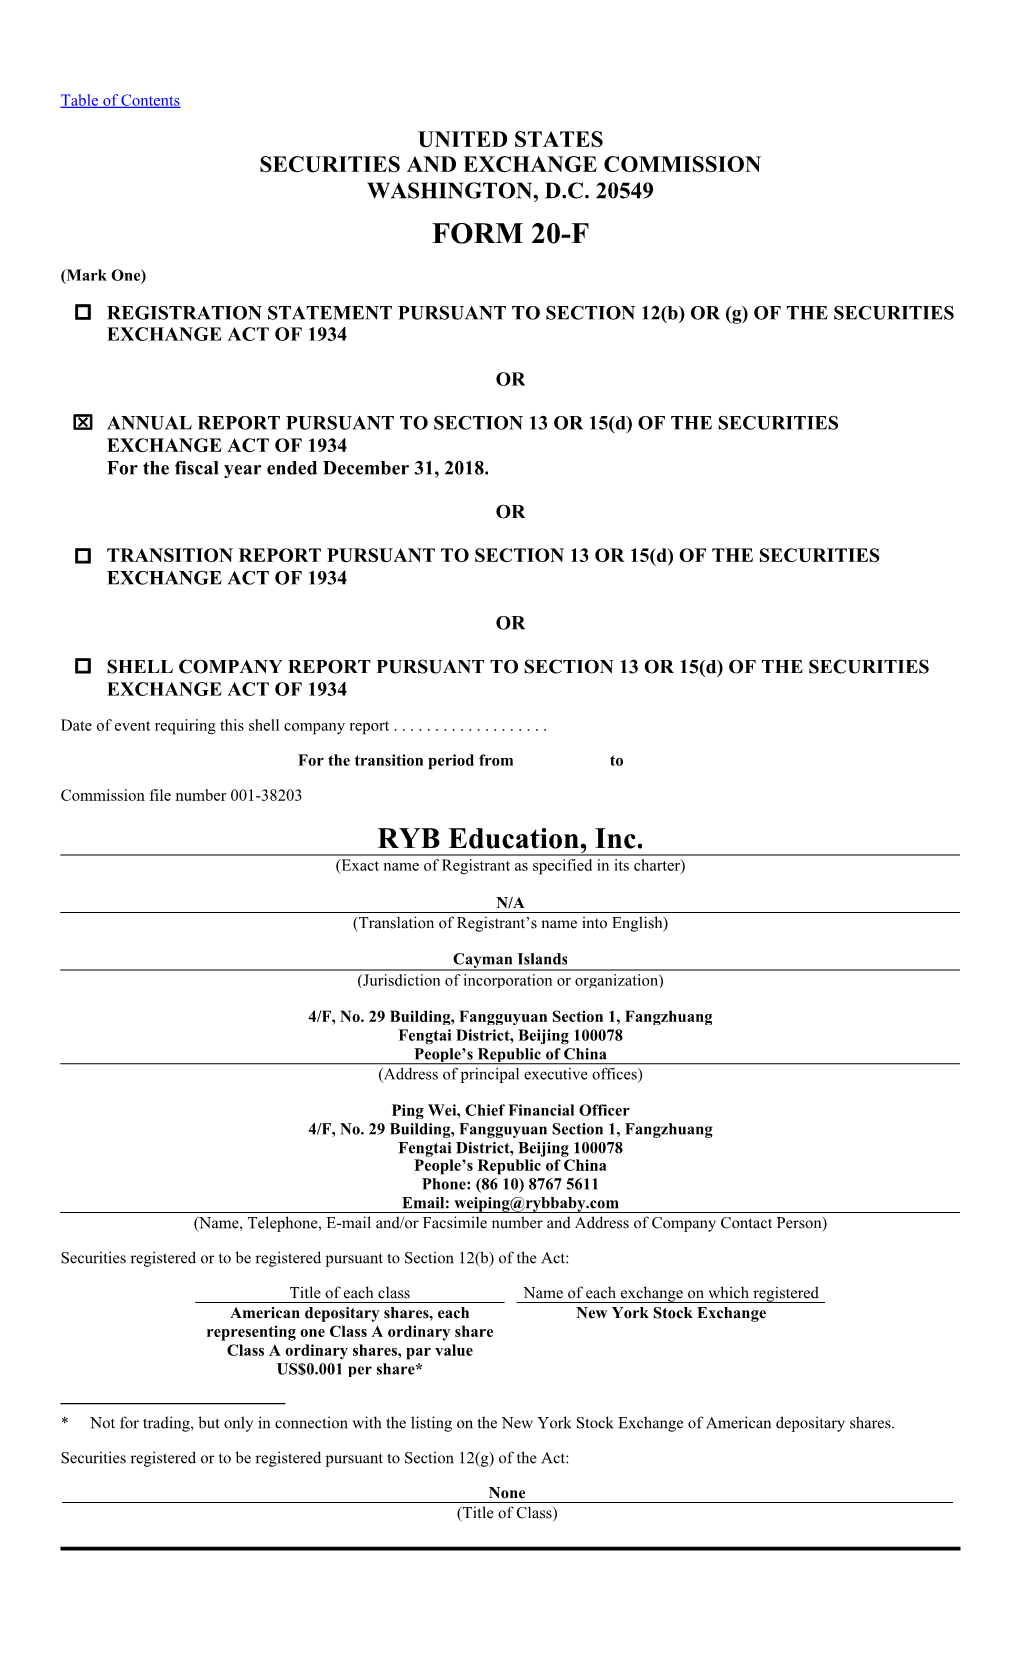 FORM 20-F RYB Education, Inc